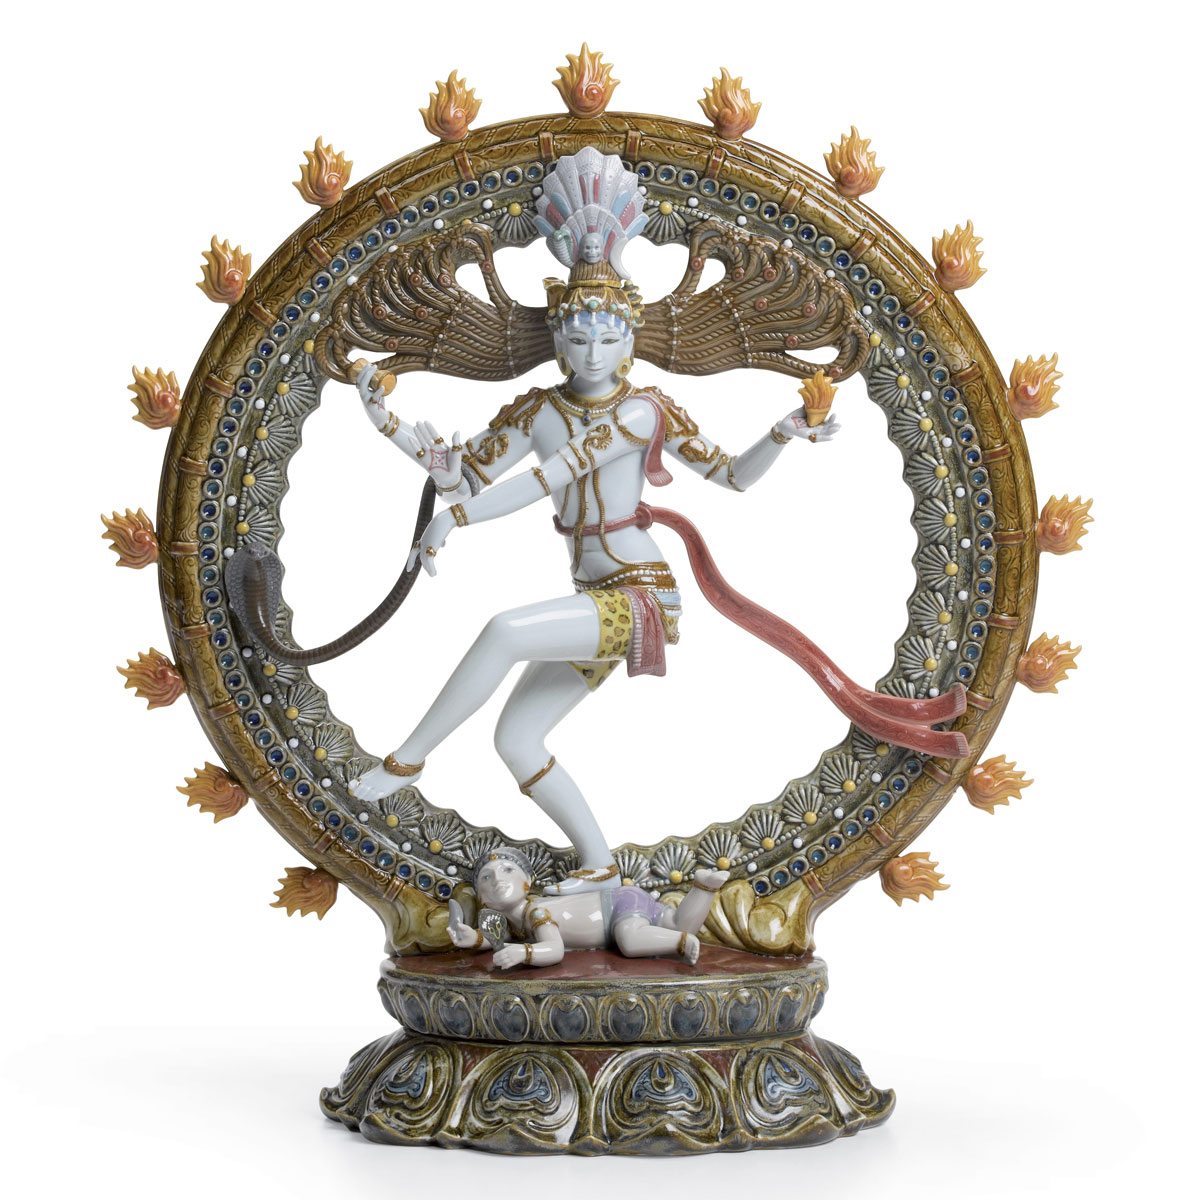 Lladro Classic Sculpture, Shiva Nataraja Sculpture. Limited Edition